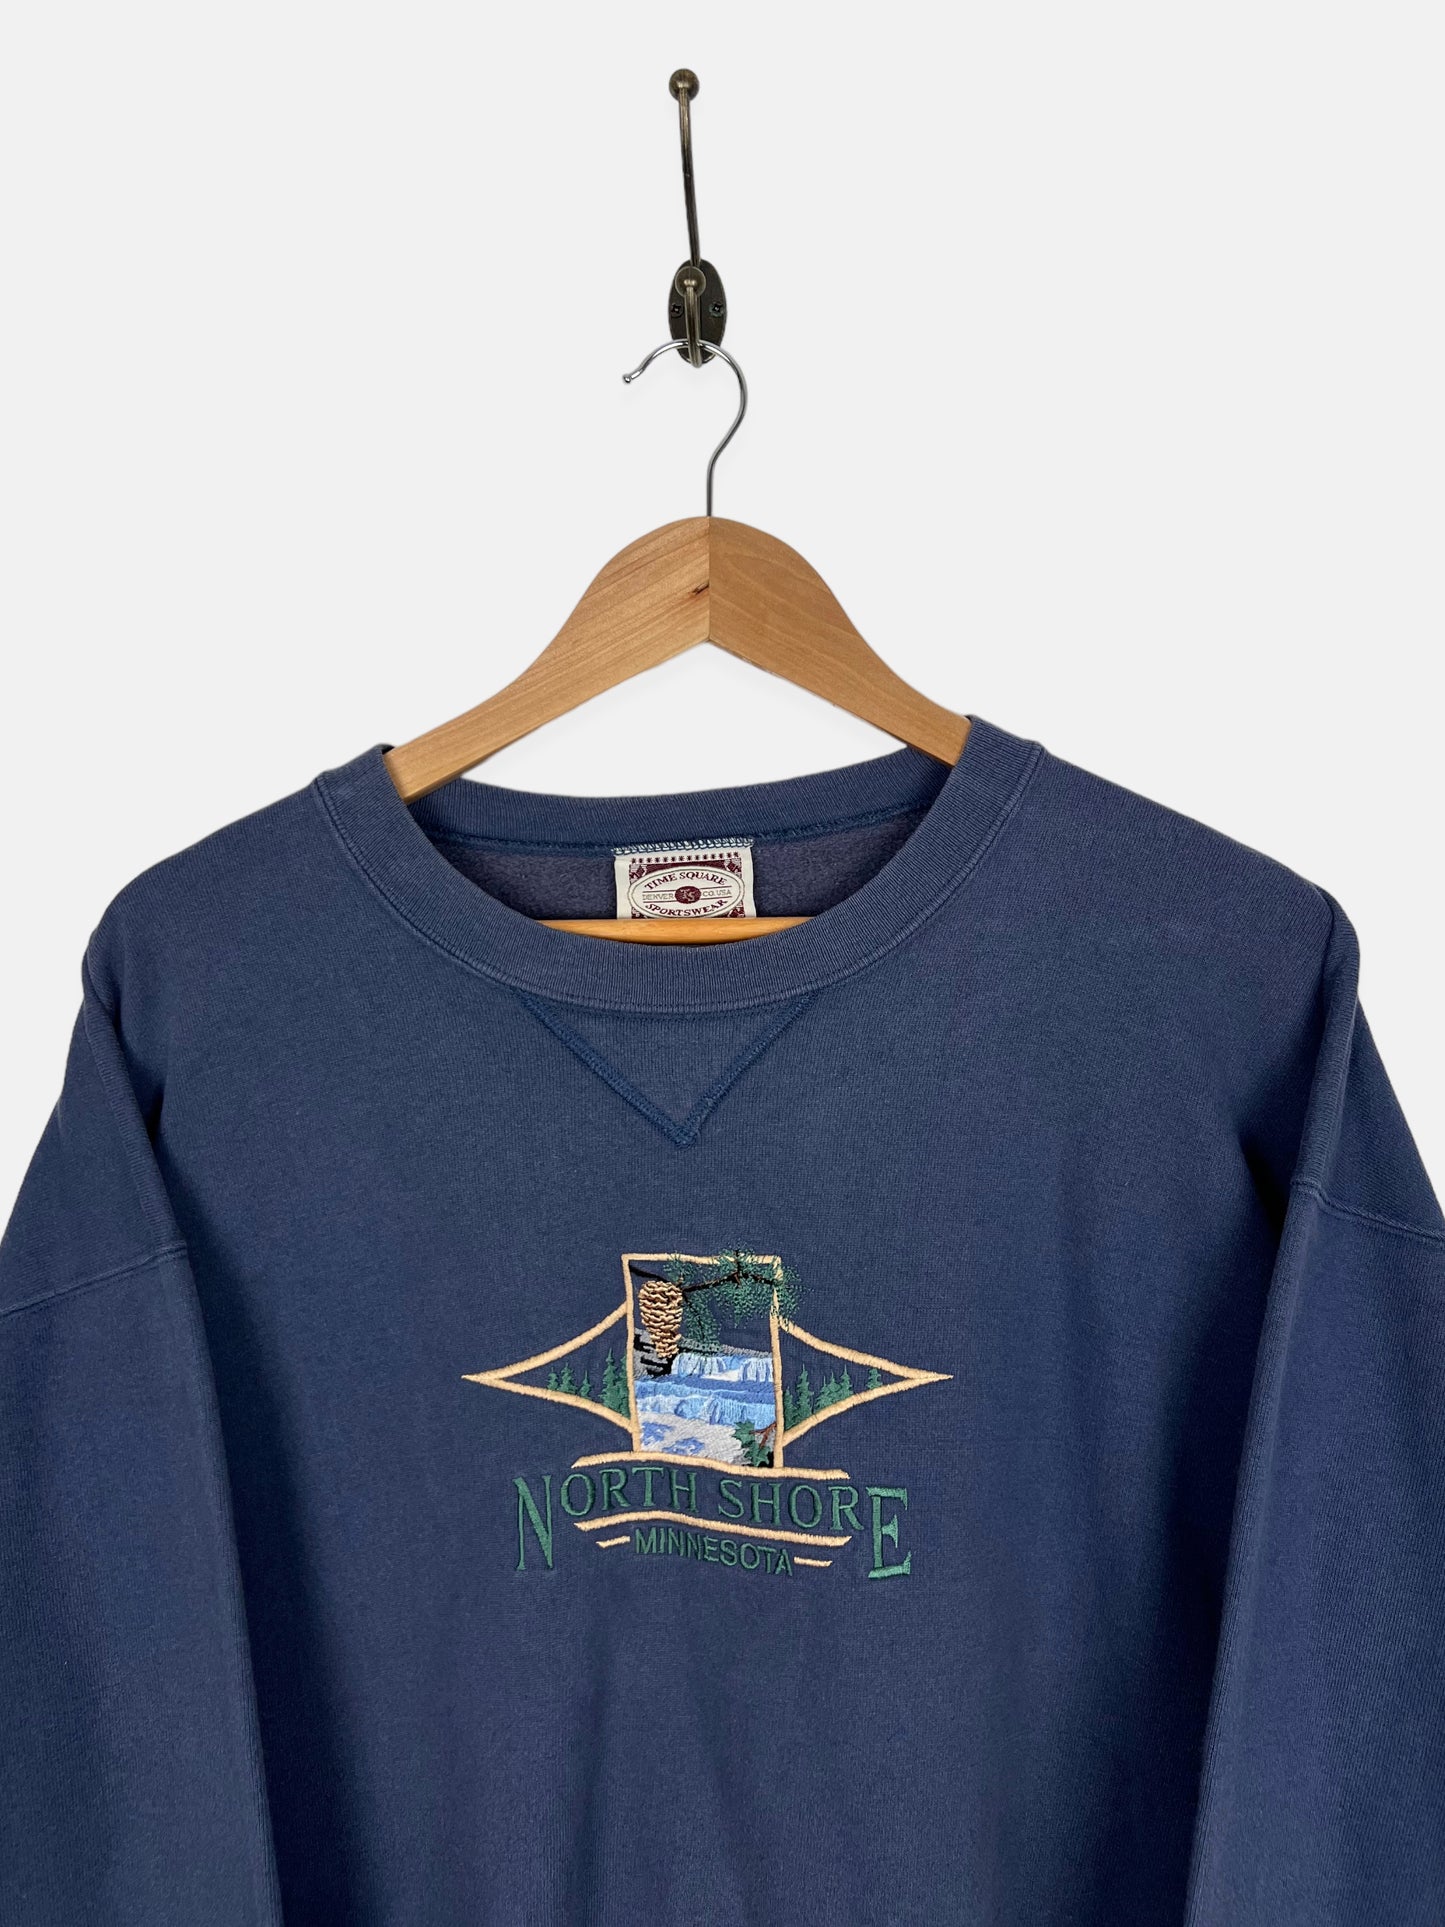 90's North Shore Minnesota USA Made Embroidered Vintage Sweatshirt Size M-L